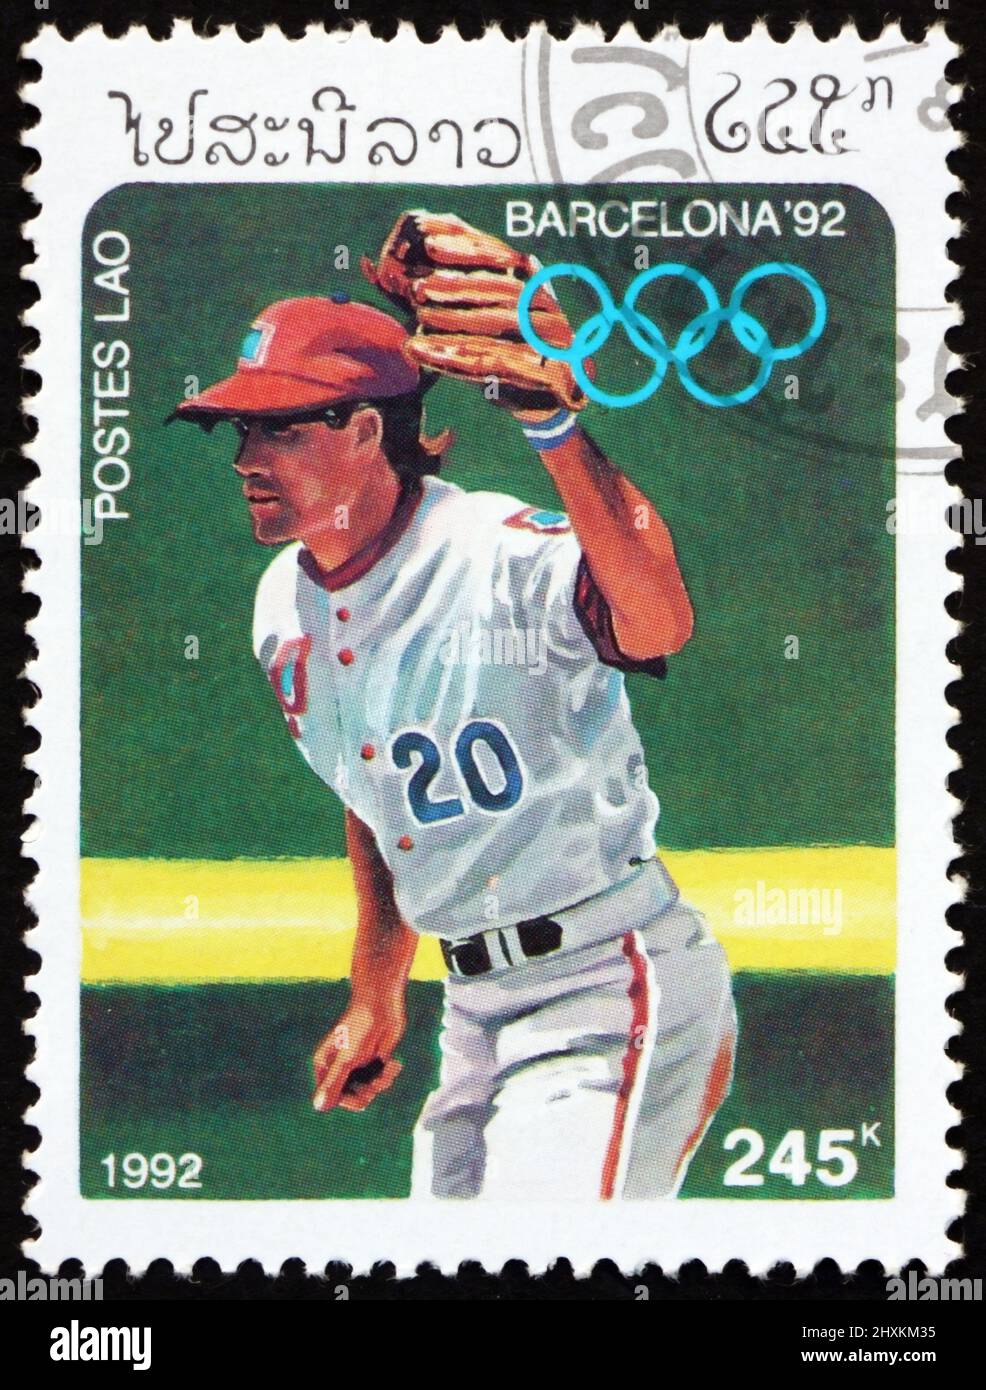 LAOS - CIRCA 1992: a stamp printed in Laos shows baseball, 1992 Summer Olympics, Barcelona, circa 1992 Stock Photo